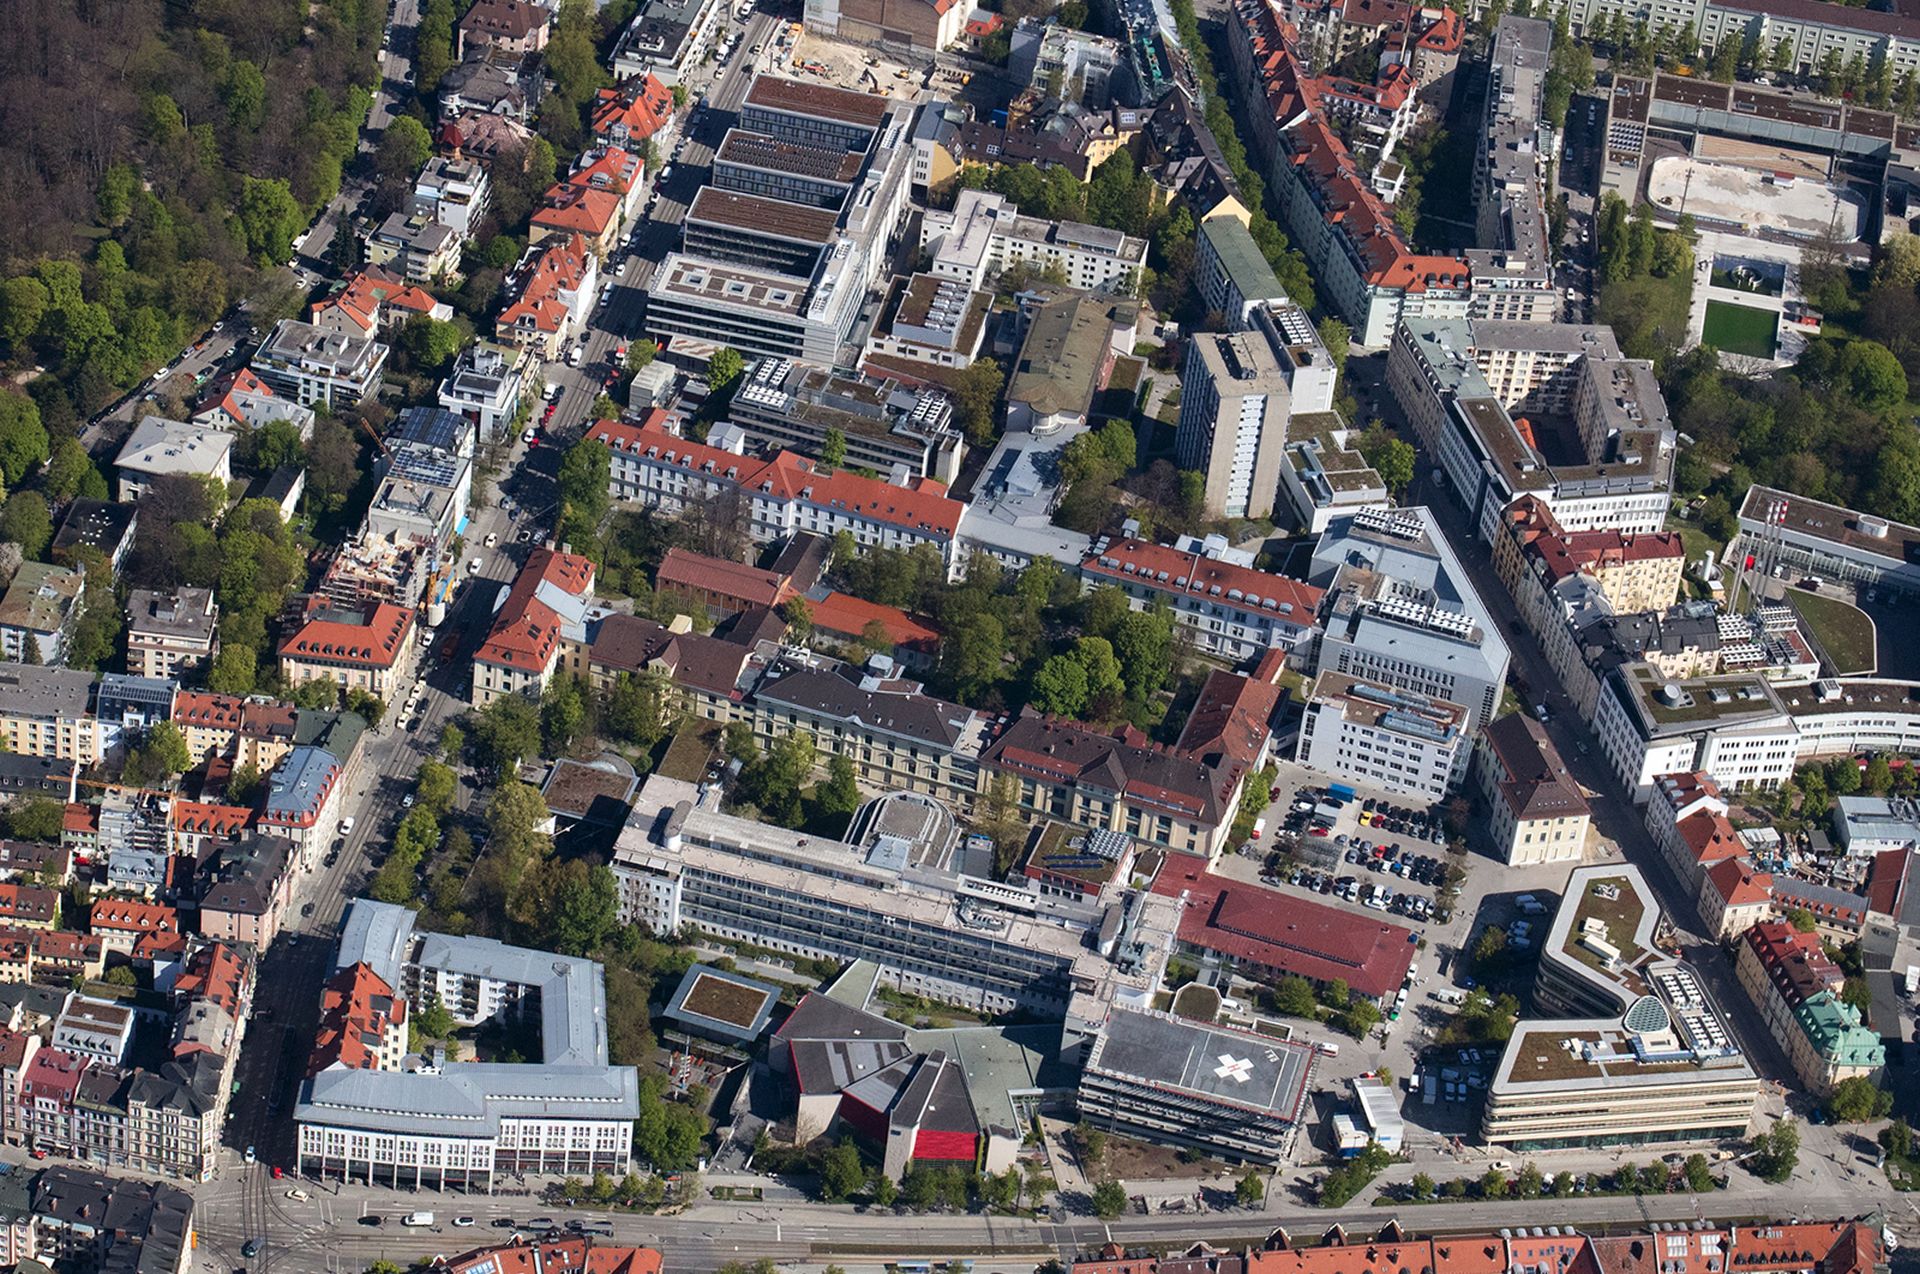 Aerial view of the hospital campus of Klinikum rechts der Isar in 2017